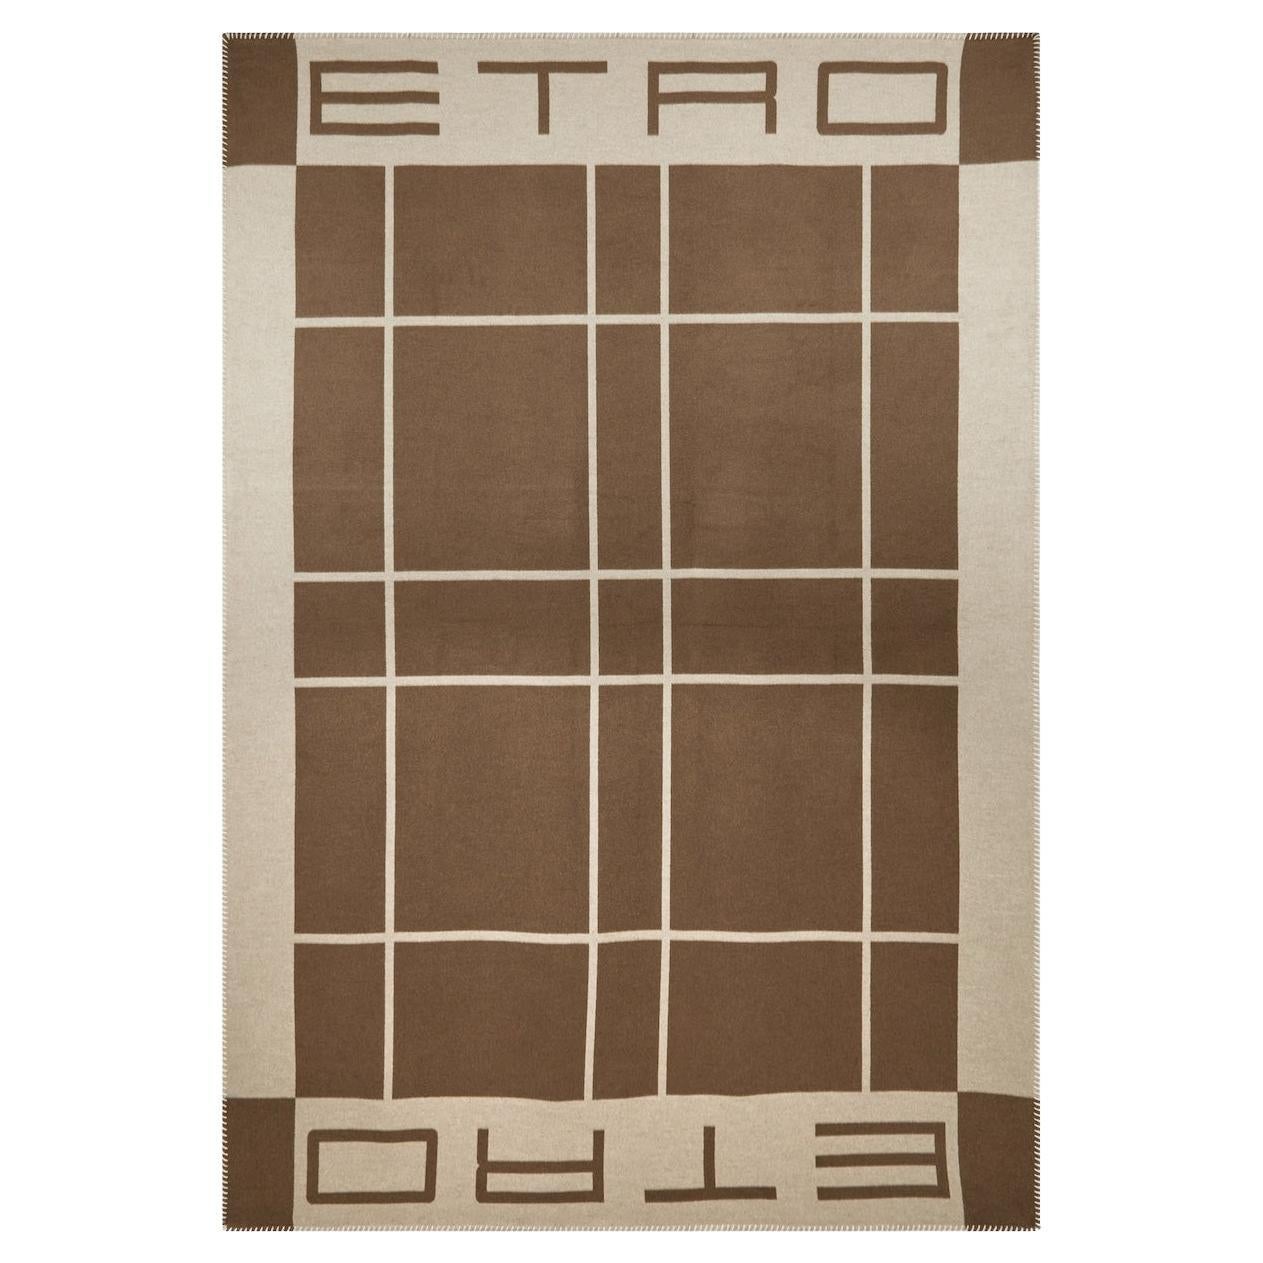 Etro Bani Silk Throw, Chestnut Brown, New in Box, Italy